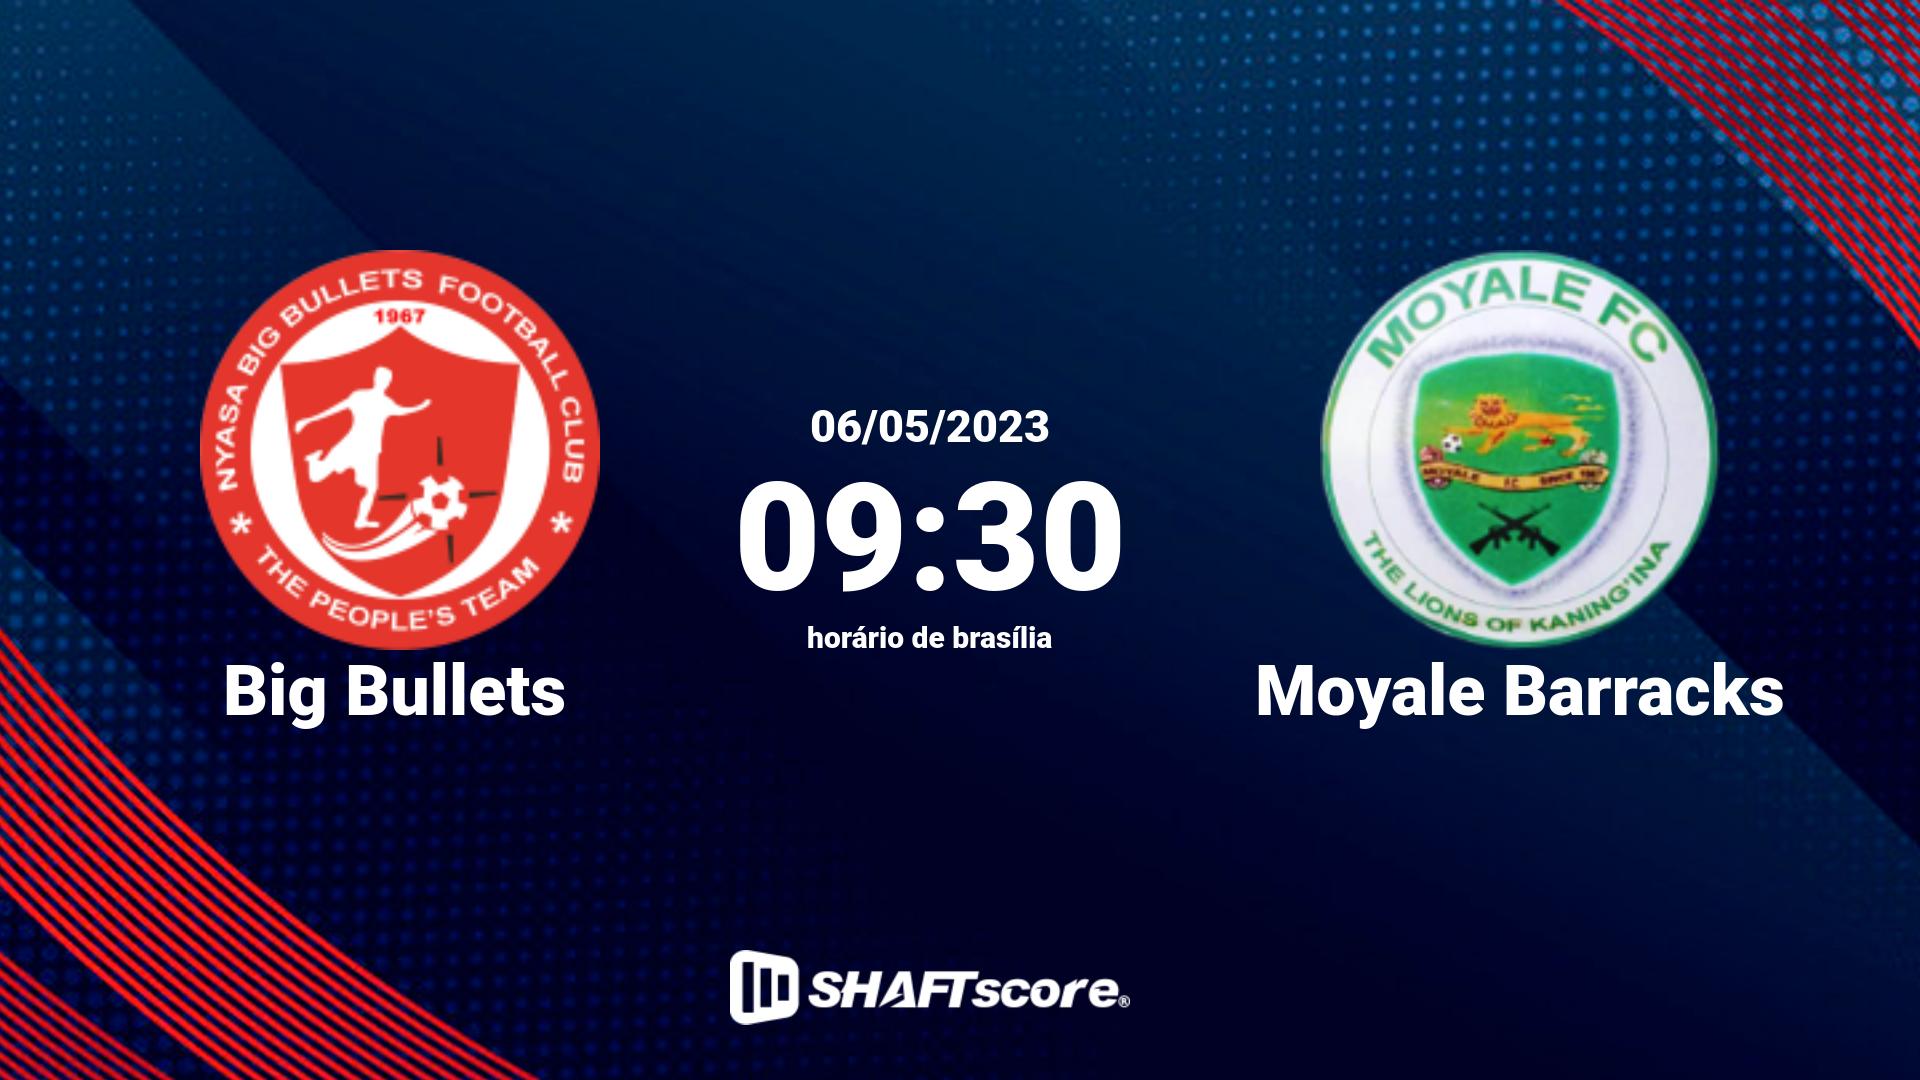 Estatísticas do jogo Big Bullets vs Moyale Barracks 06.05 09:30